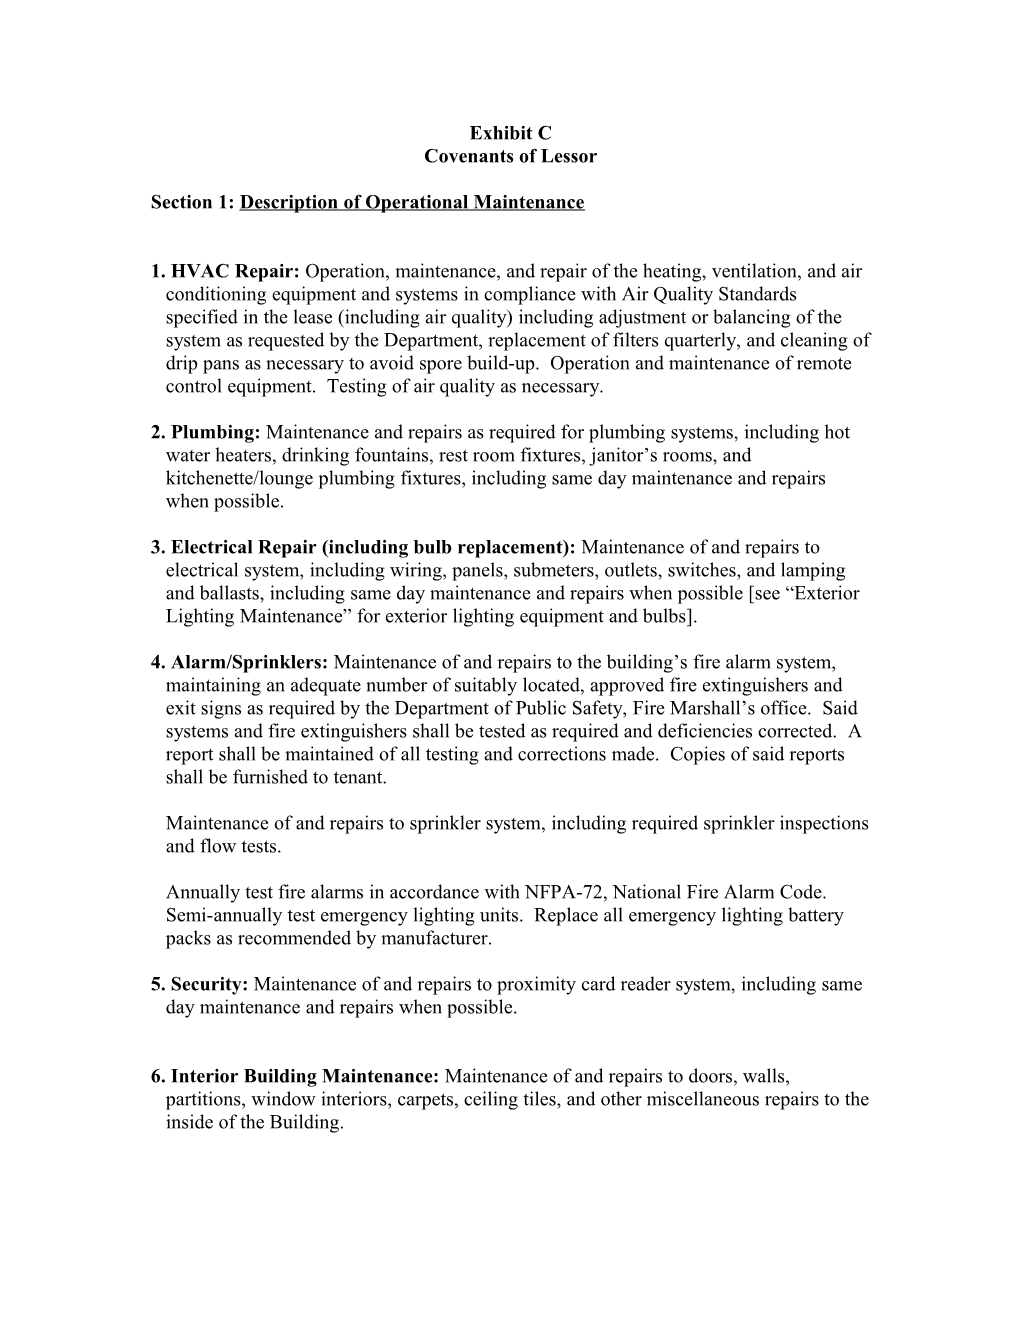 Section 1: Description of Operational Maintenance